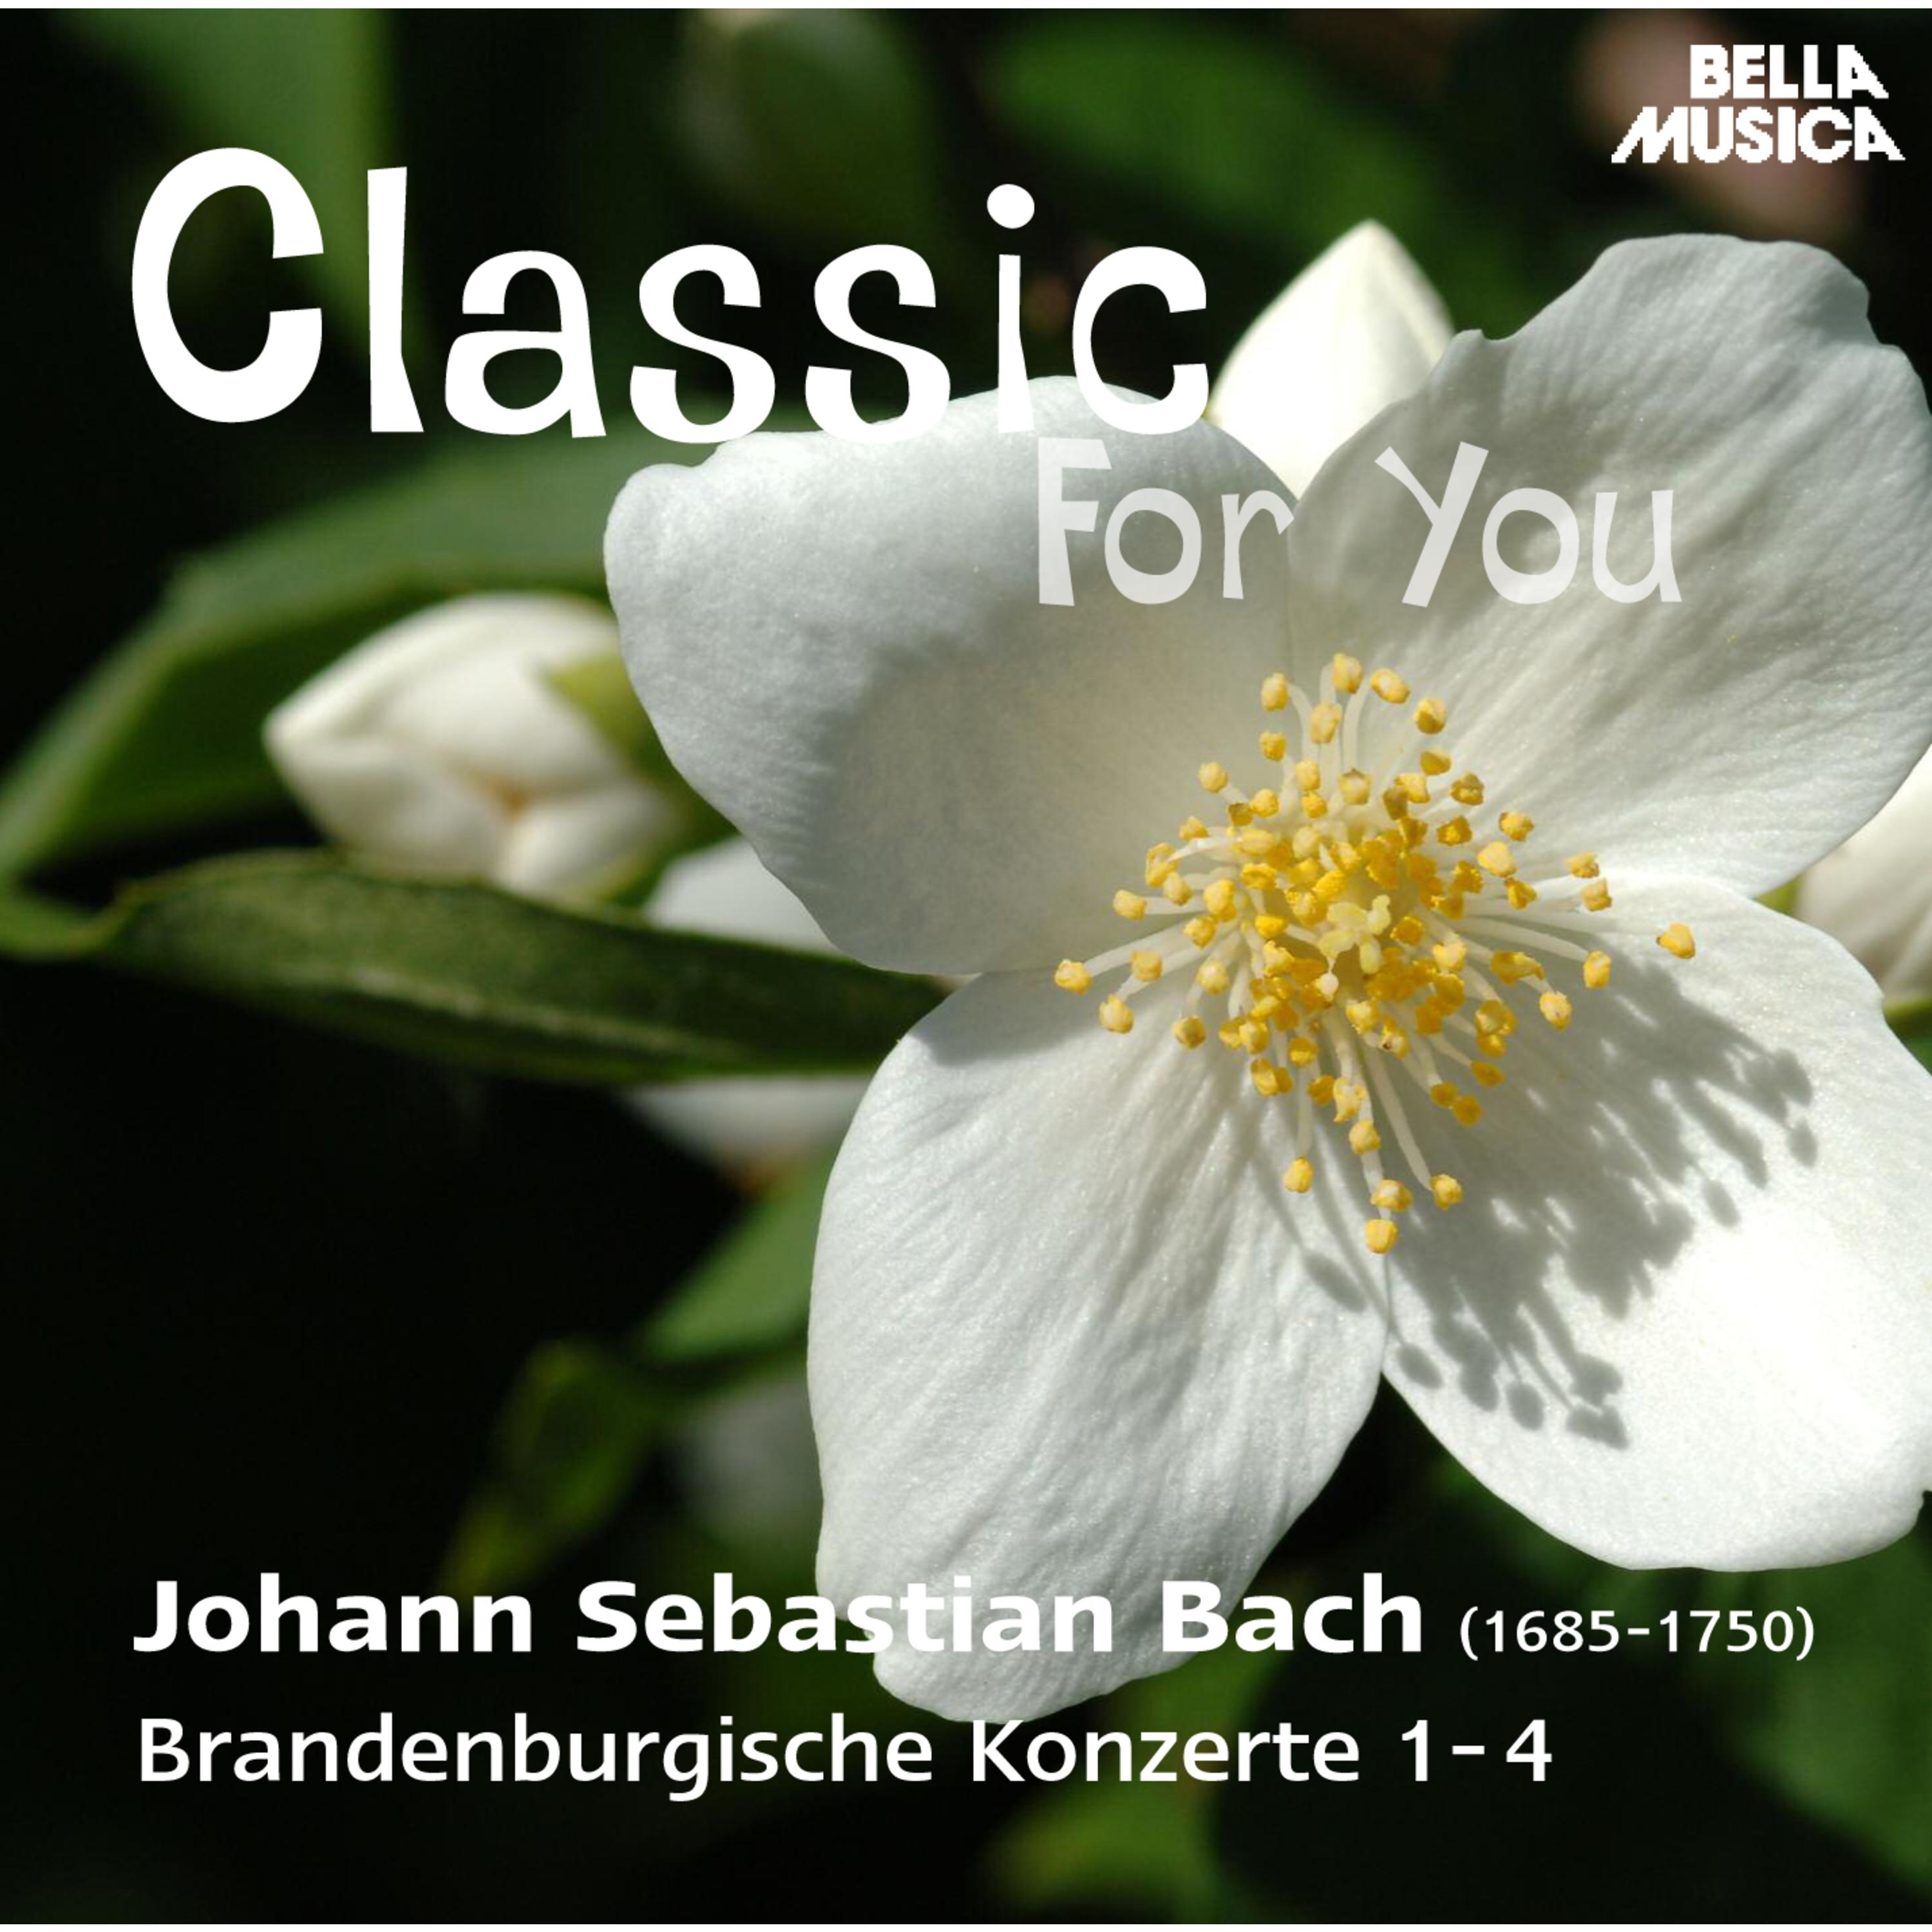 Brandenburgisches Konzert in F Major, BWV 1046, No. 1: II. Adagio